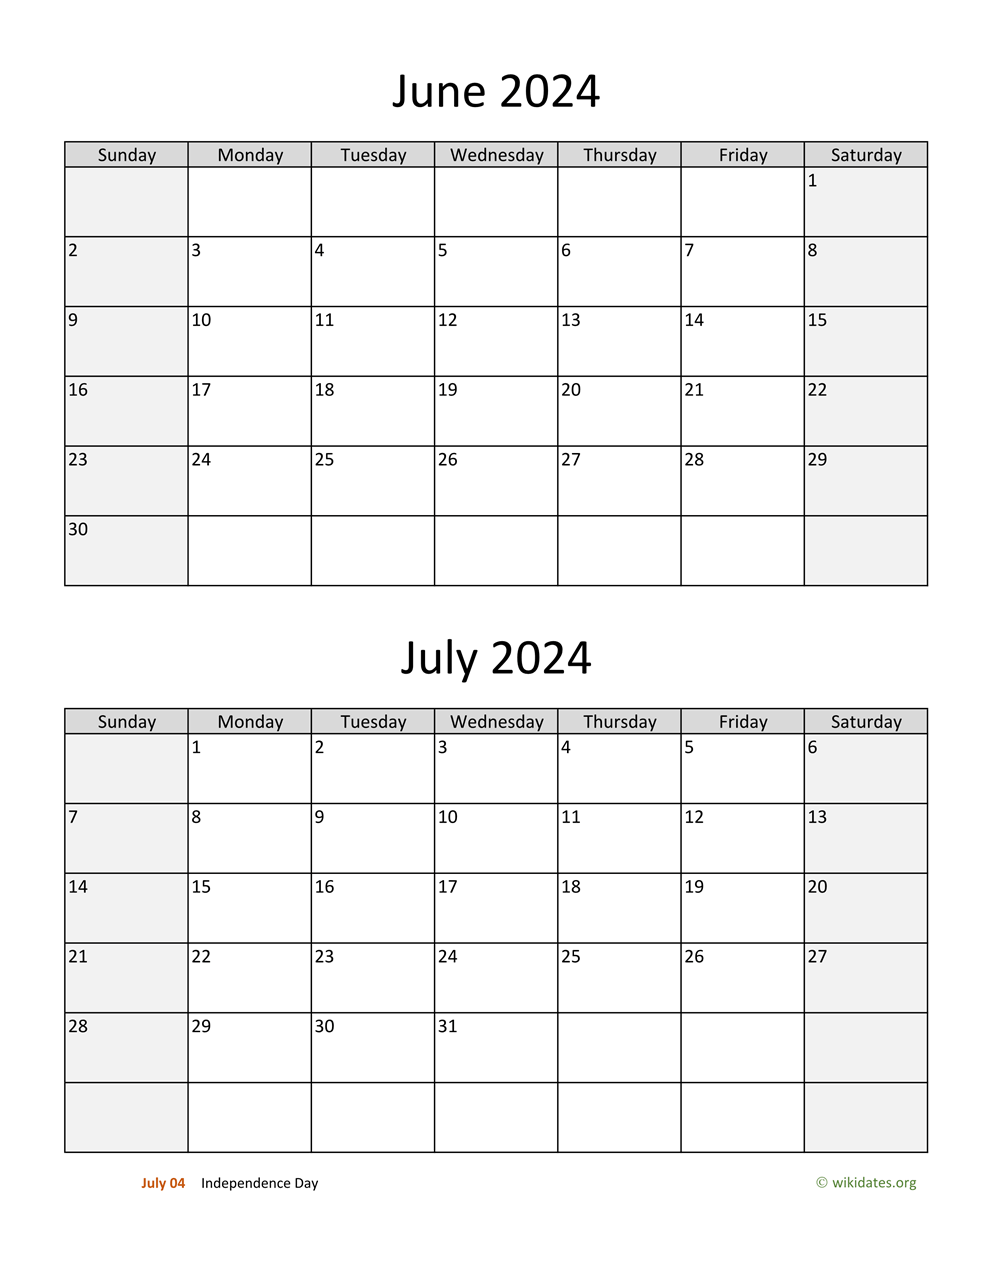 June And July 2024 Calendar | Wikidates for June July 2024 Calendar Printable